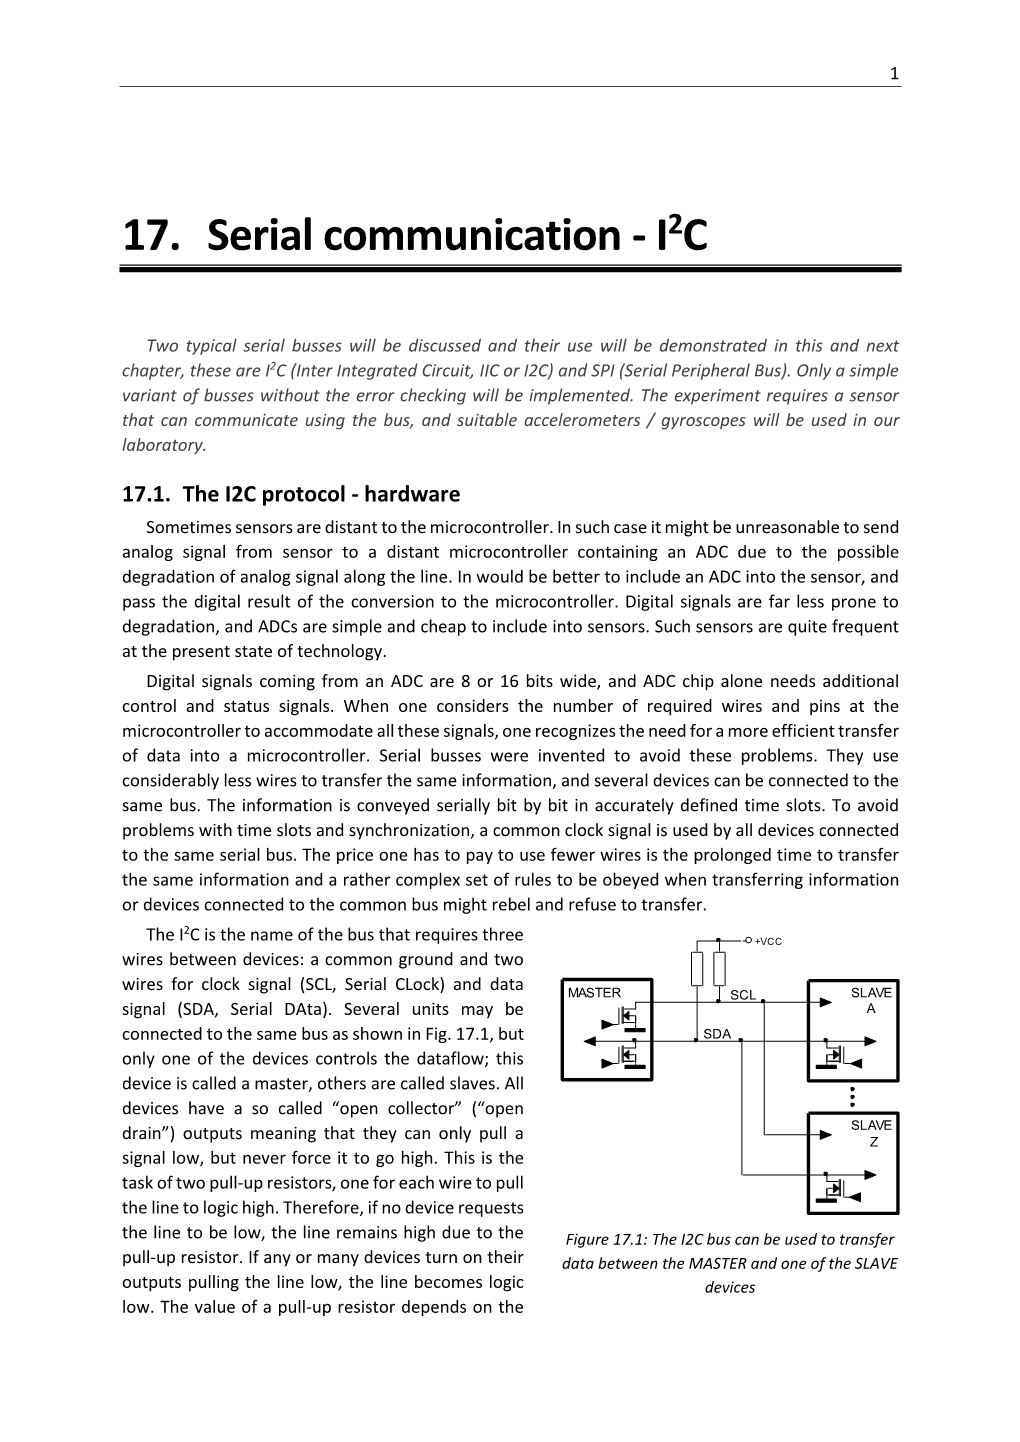 17. Serial Communication - I2C